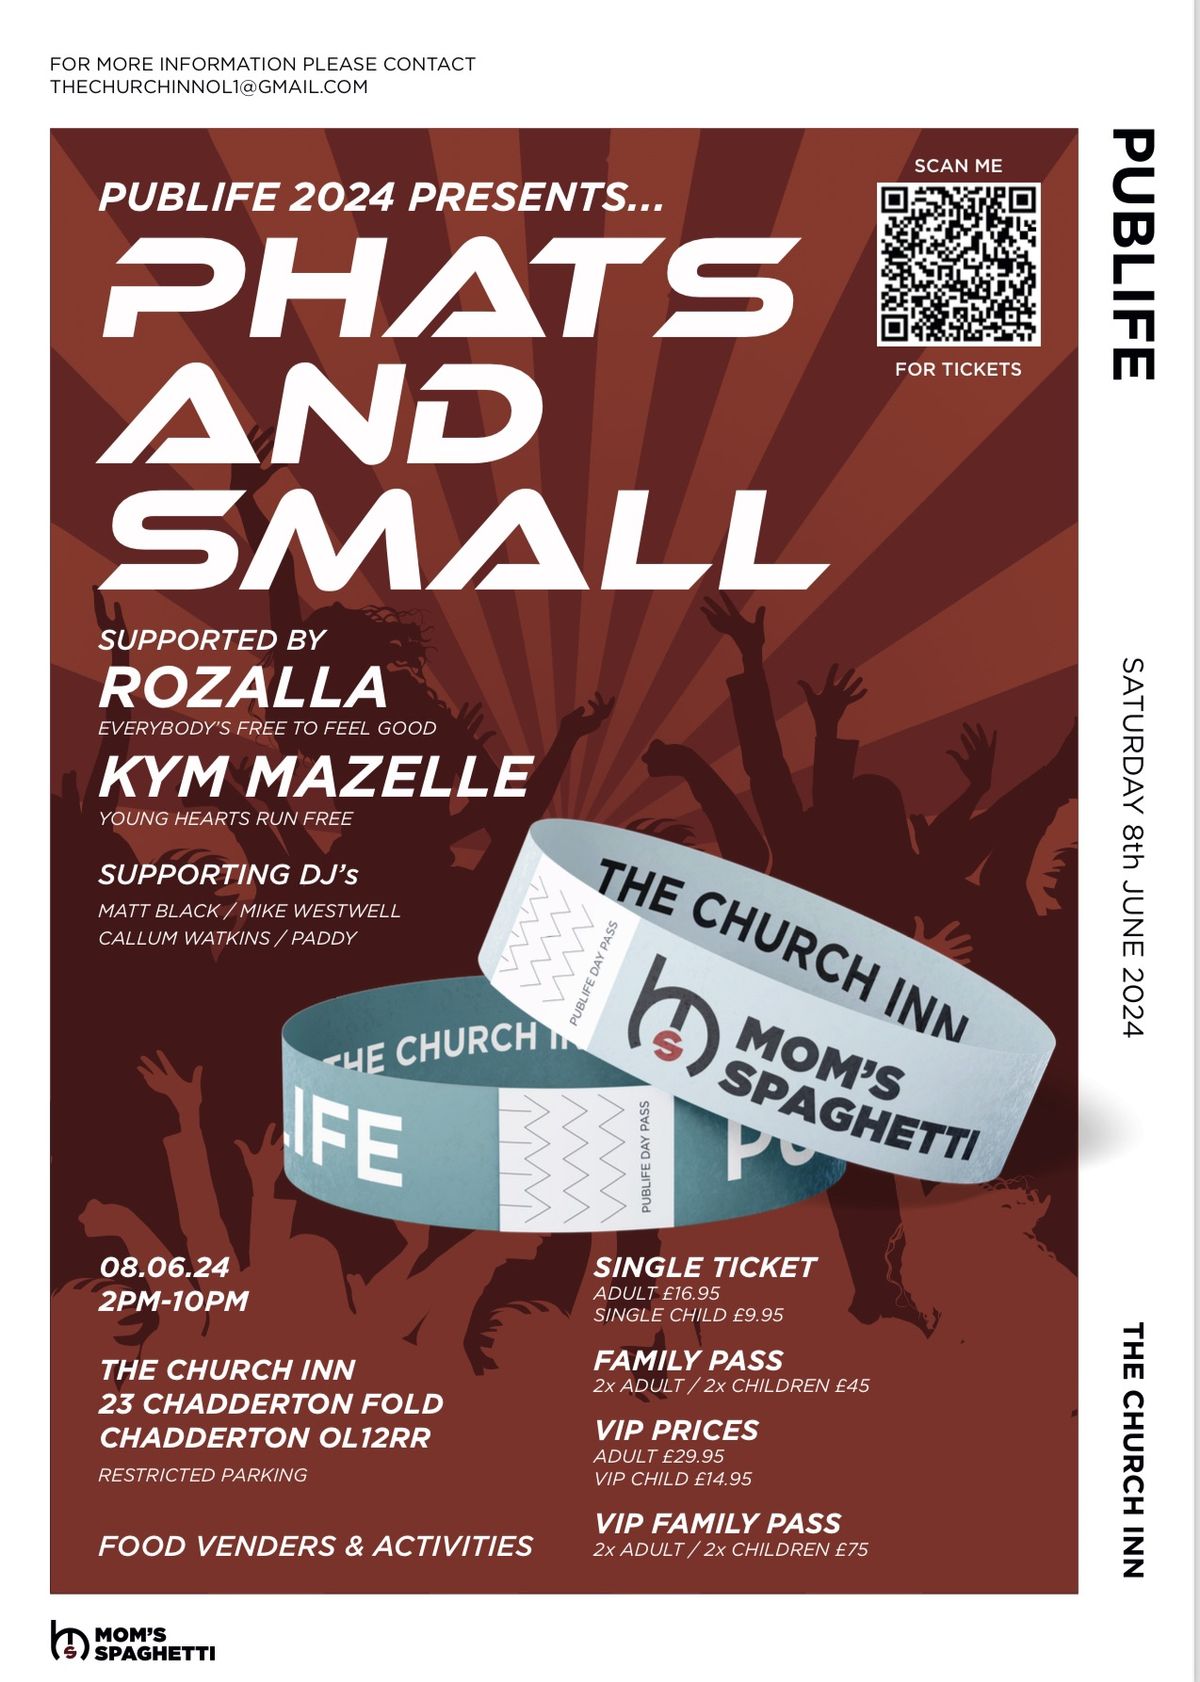 PUBLIFE 2024 Presents PHATZ & SMALL, KYM MAZELLE & ROZALLA + MUCH MORE